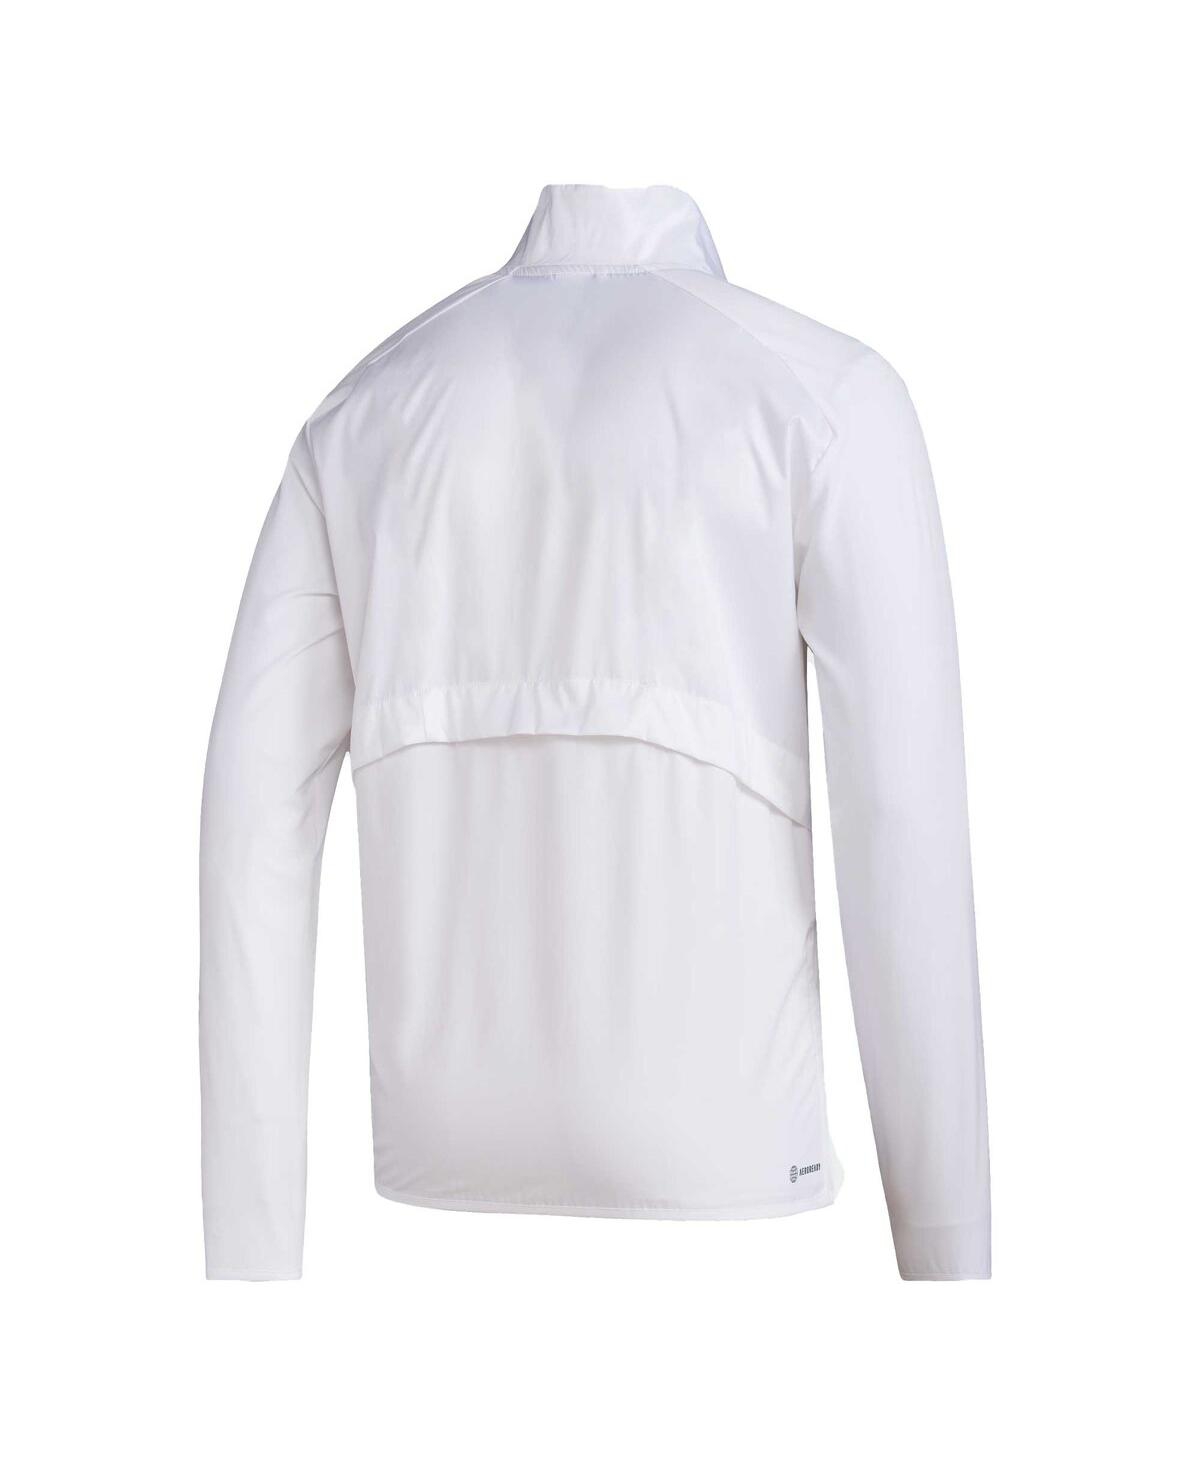 Shop Adidas Originals Men's Adidas White Nebraska Huskers Sideline Aeroready Raglan Sleeve Quarter-zip Jacket